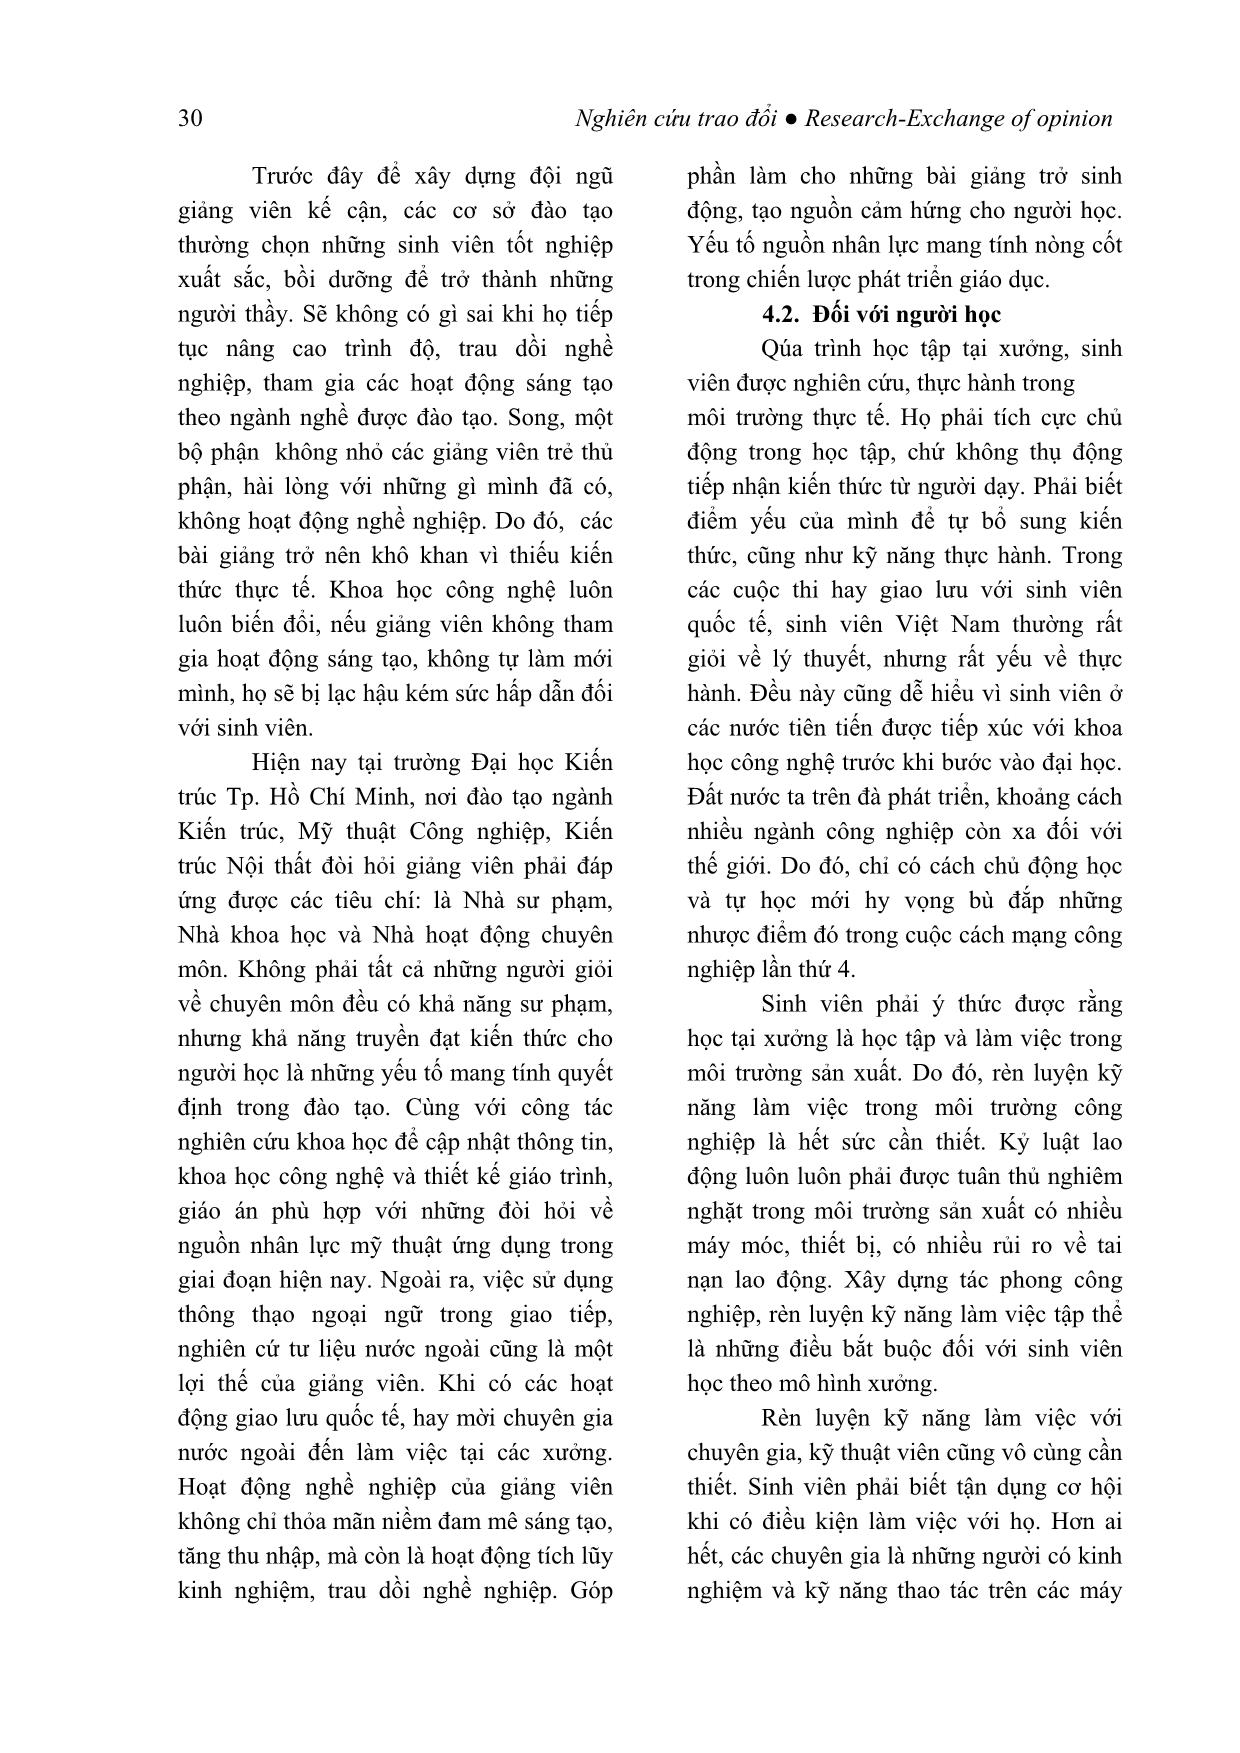 Dao-Tao-nganh-tao-dang-cong-nghiep-voi-mo-hinh-hoc-tap-tai-x_SID12_PID1278718 trang 7